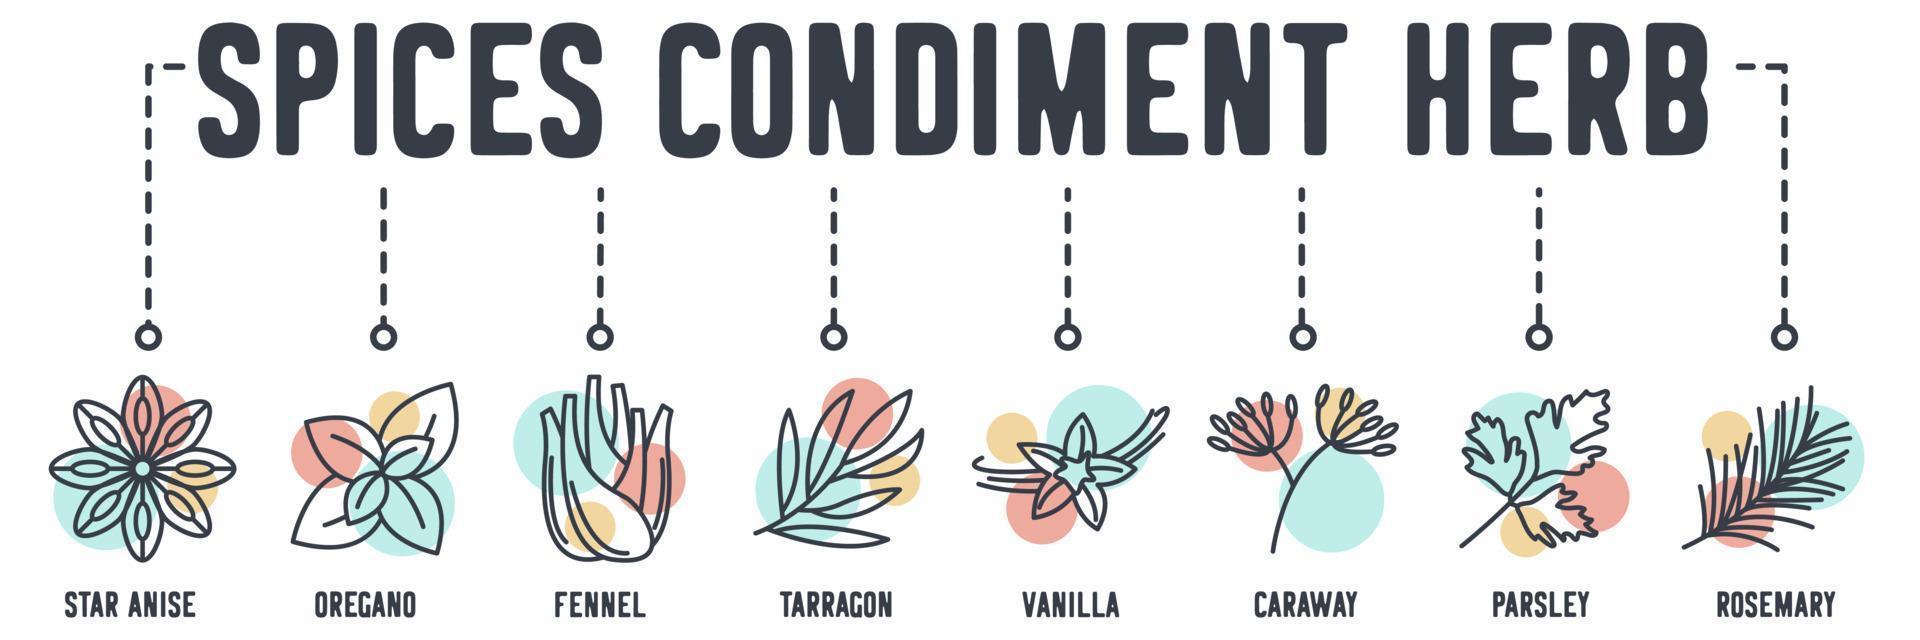 spices condiment herb banner web icon. star anise, oregano, fennel, tarragon, vanilla, caraway, parsley, rosemary vector illustration concept.